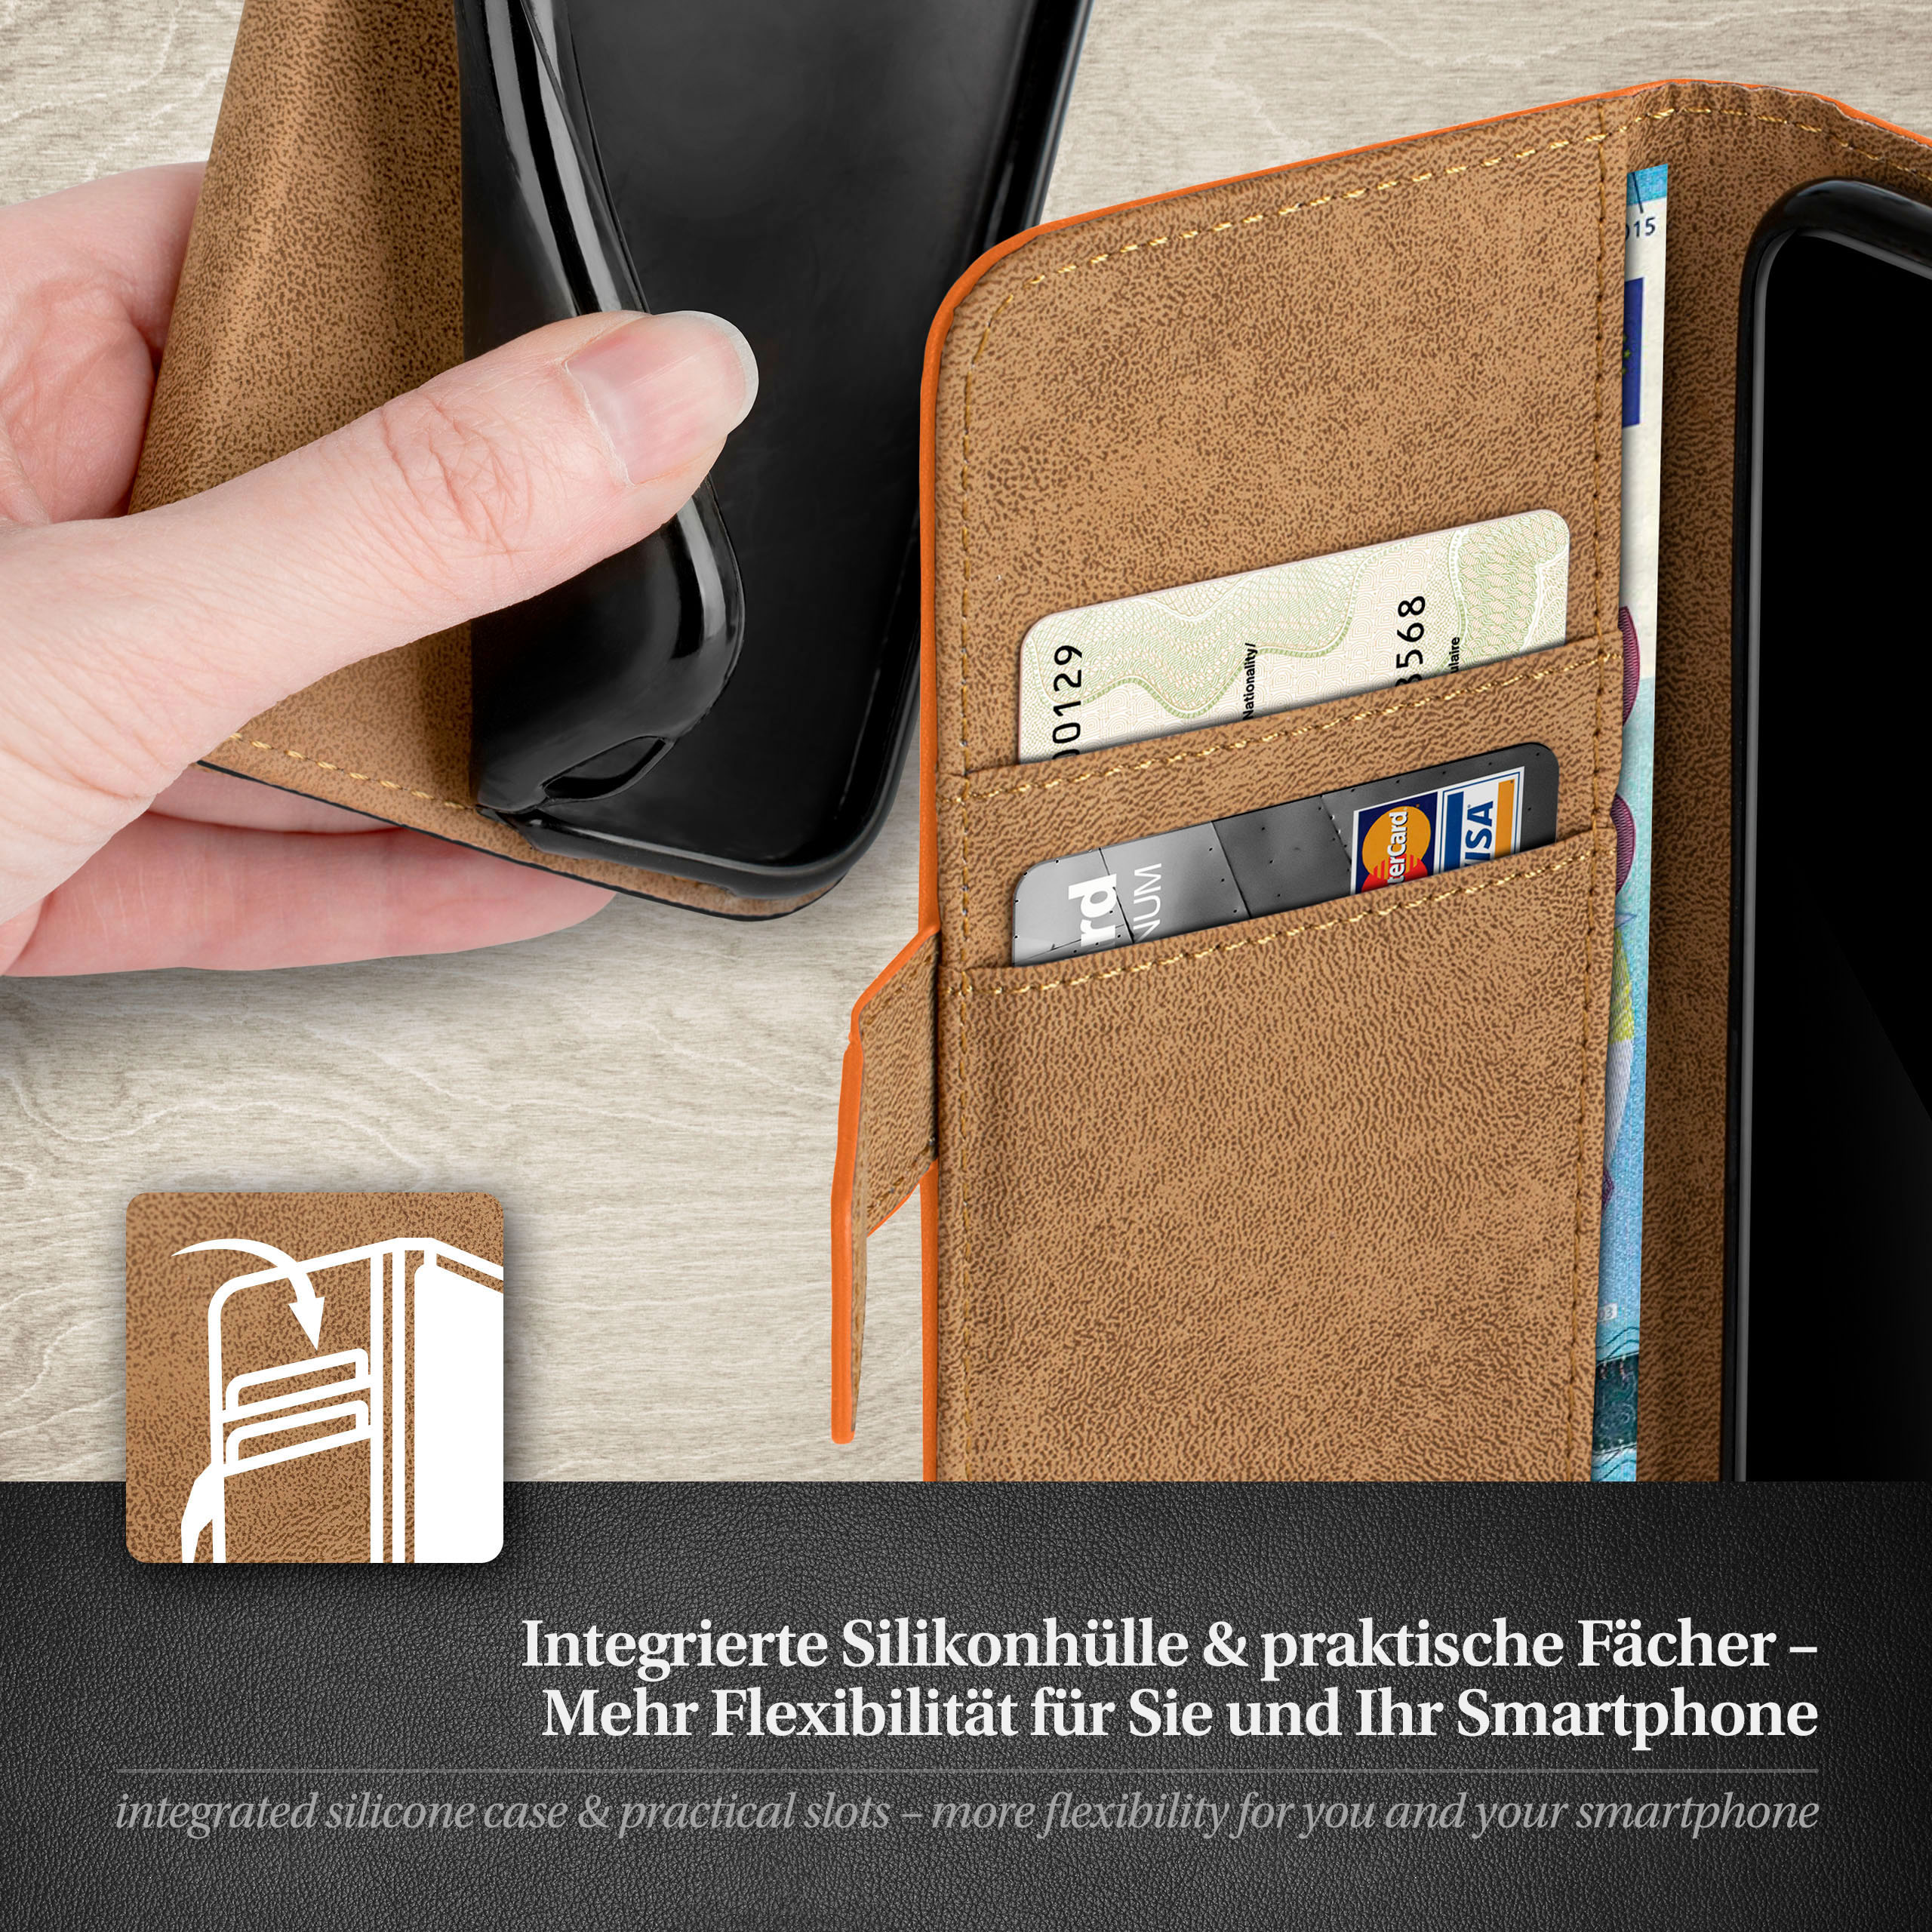 MOEX Bookcover, S3 Galaxy Neo, Canyon-Orange Book Case, / Samsung, S3